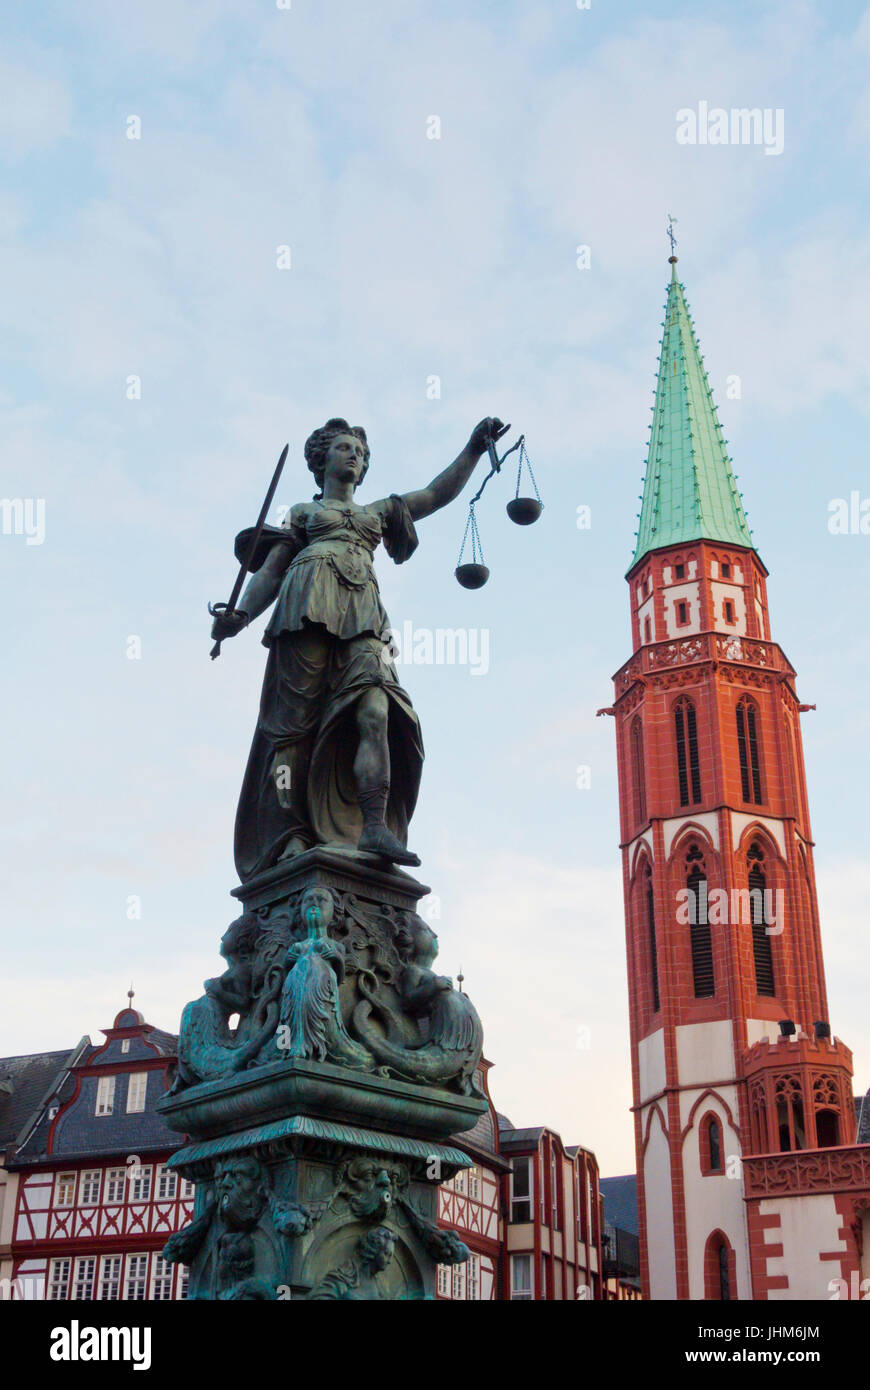 Justitia, justice statue, and Alte Nikolaikirche, Römerberg, Altstadt, old town, Frankfurt am Main, Hesse, Germany Stock Photo